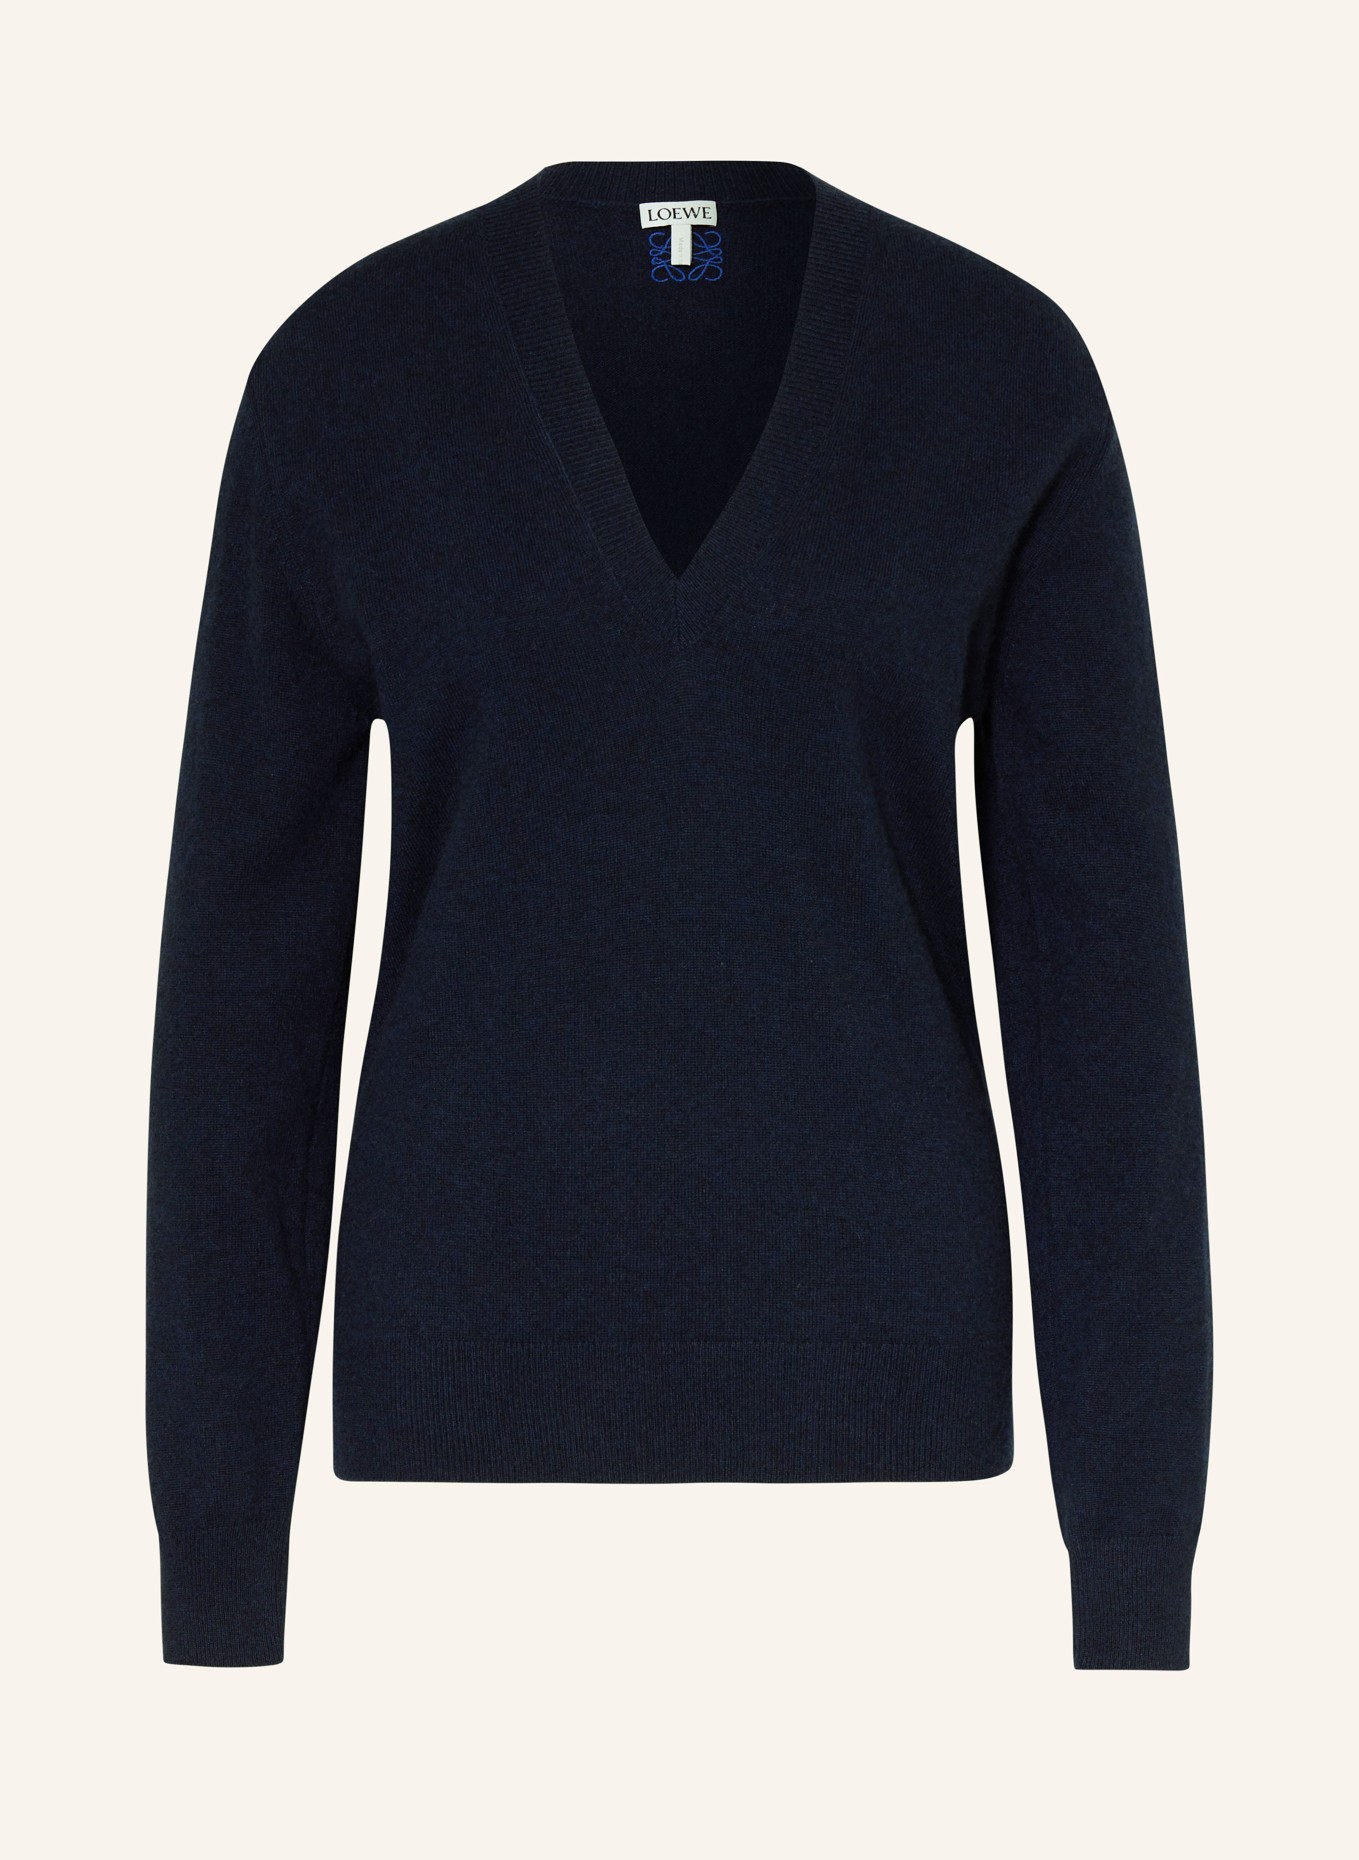 LOEWE Cashmere-Pullover, Farbe: DUNKELBLAU (Bild 1)